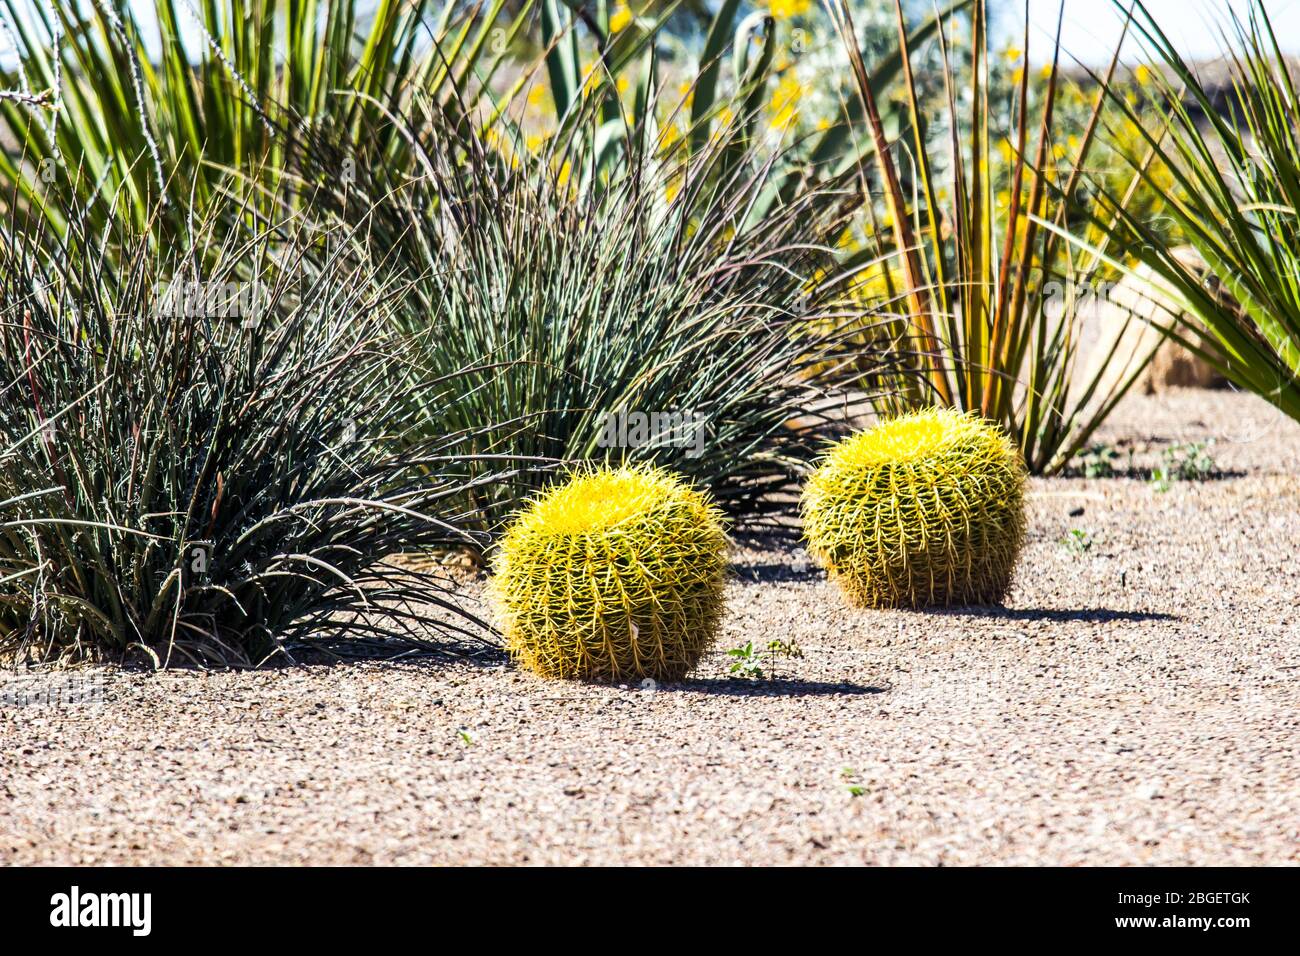 Two Small Barrel Cactus In Arizona Desert Stock Photo